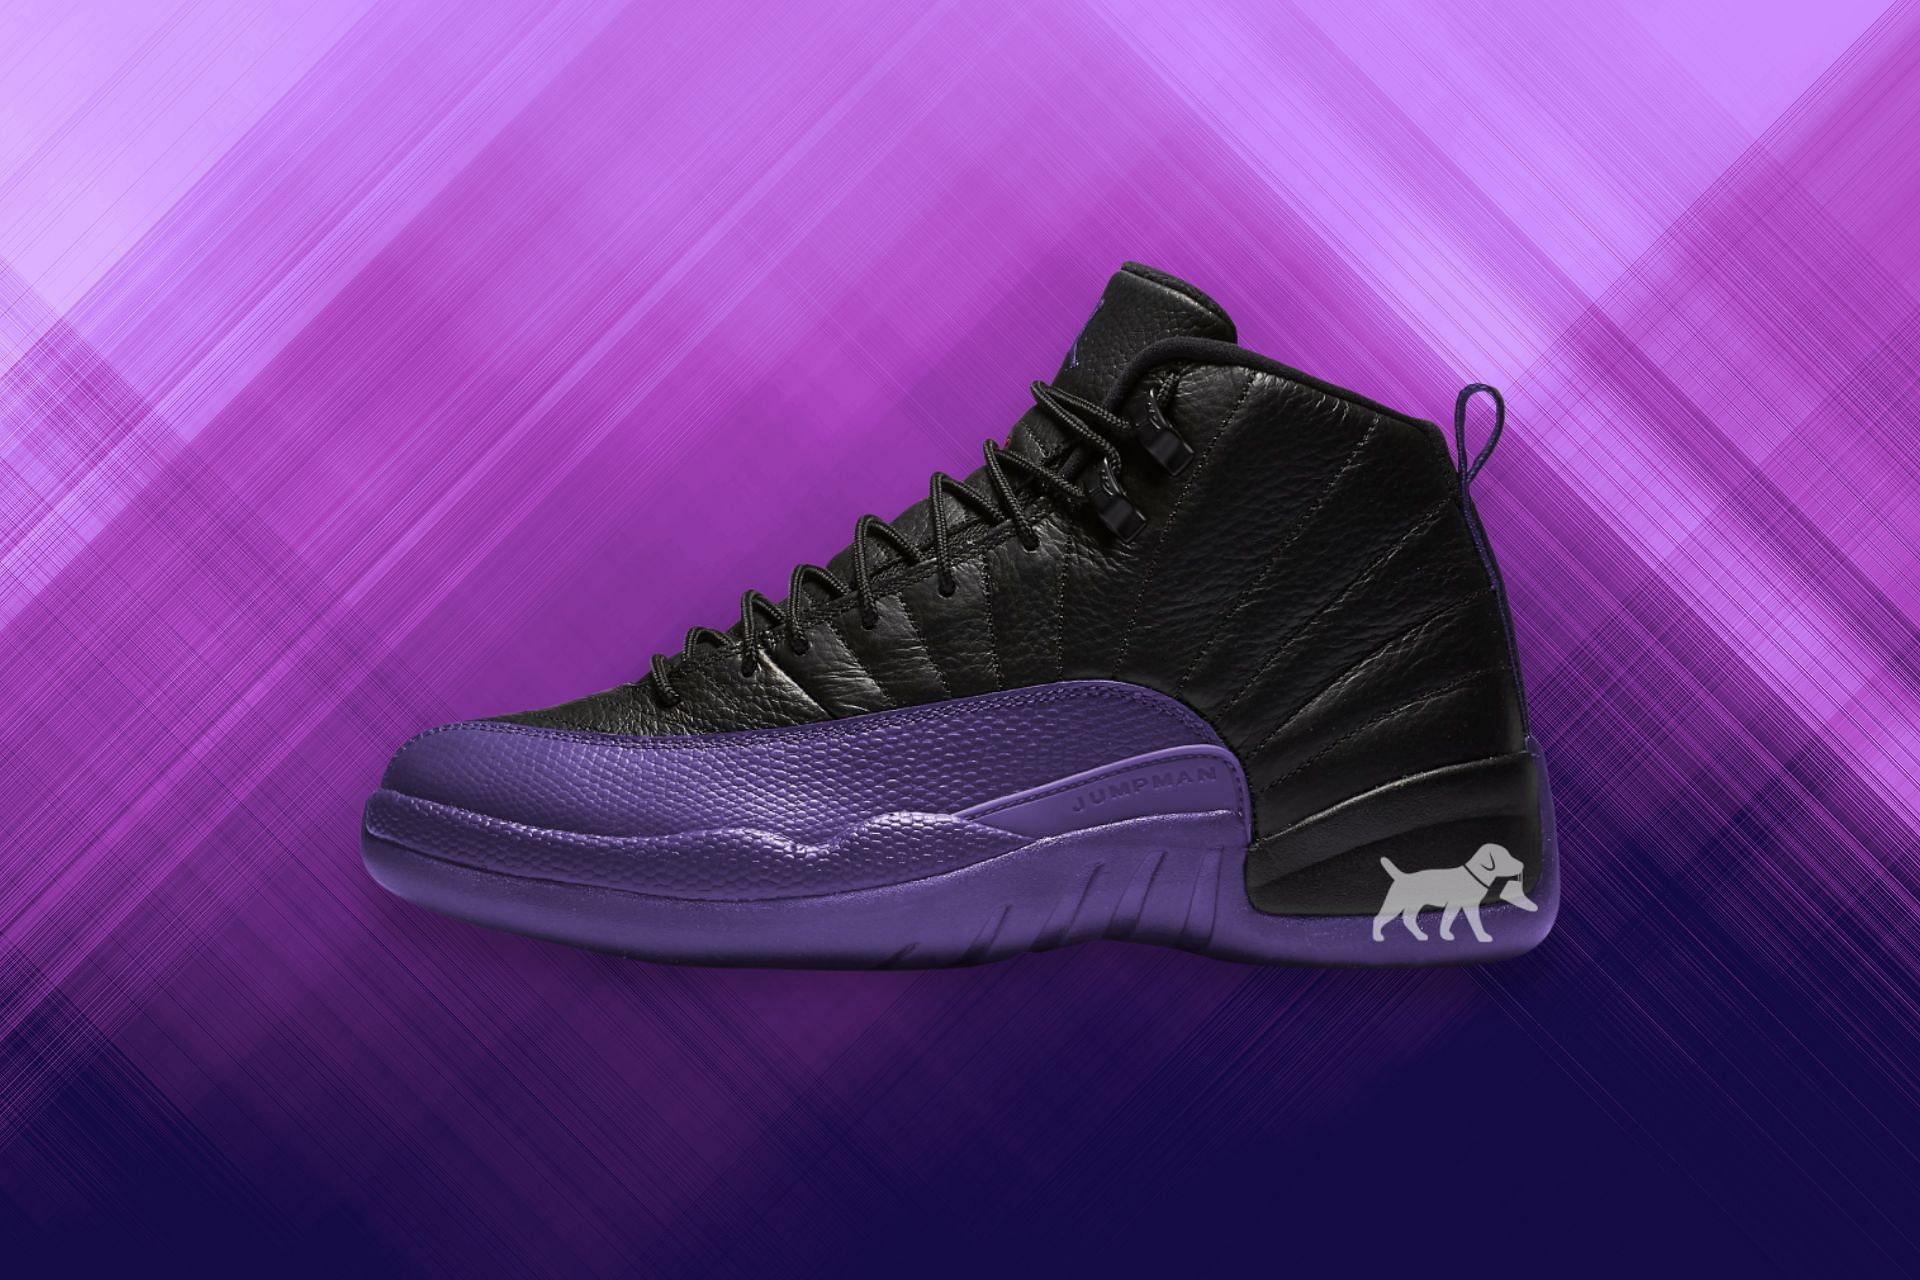 Where to buy Air Jordan 12 Retro “Field Purple” shoes? Price, release